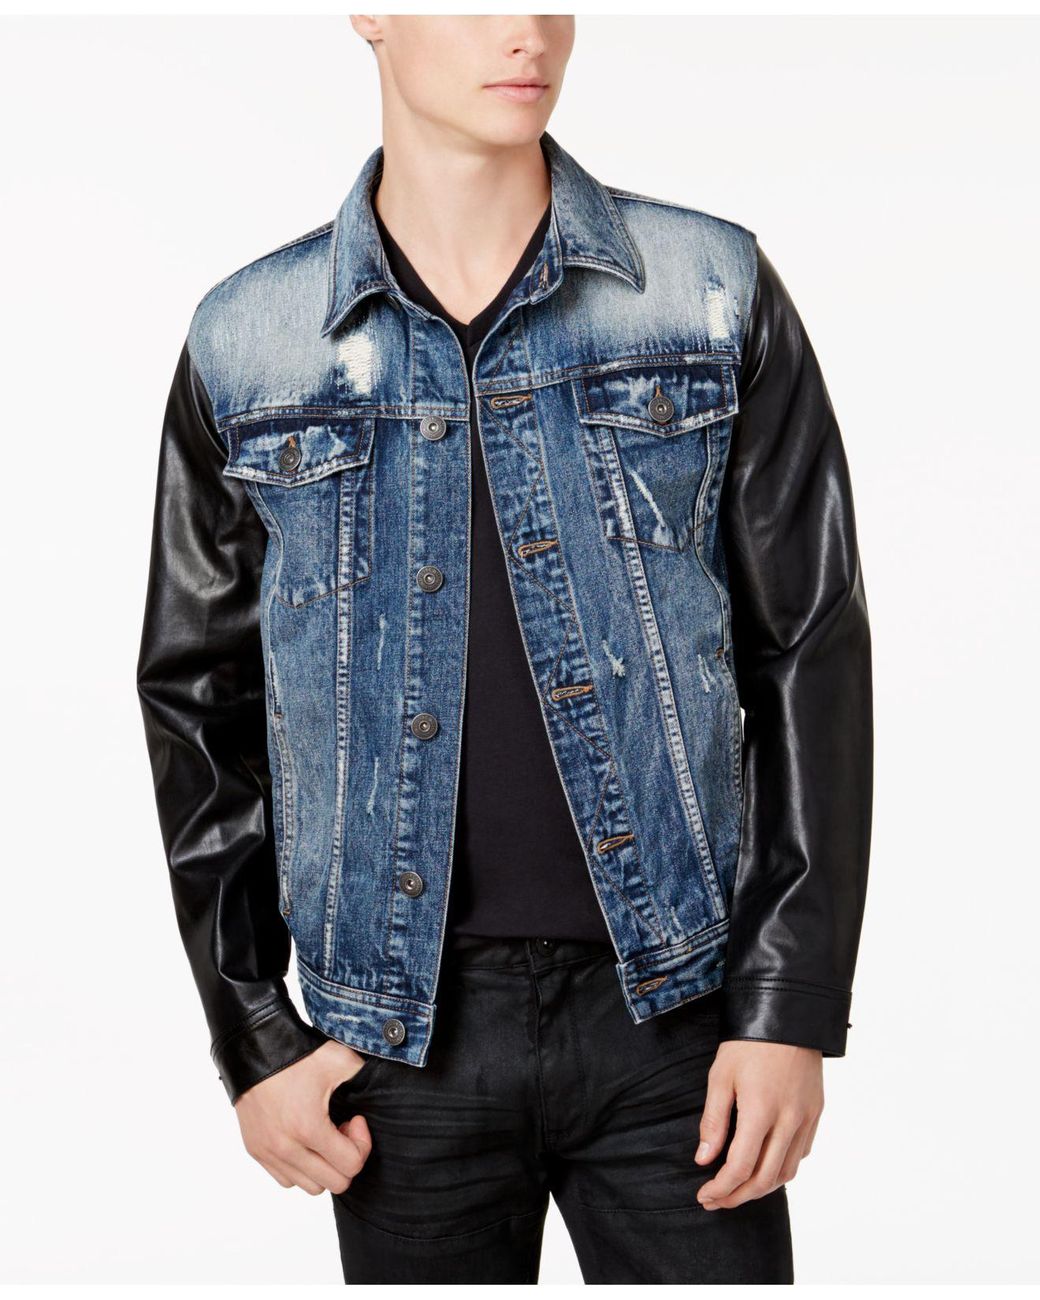 20 Leather Sleeve Jacket Outfits For Men  Styleoholic